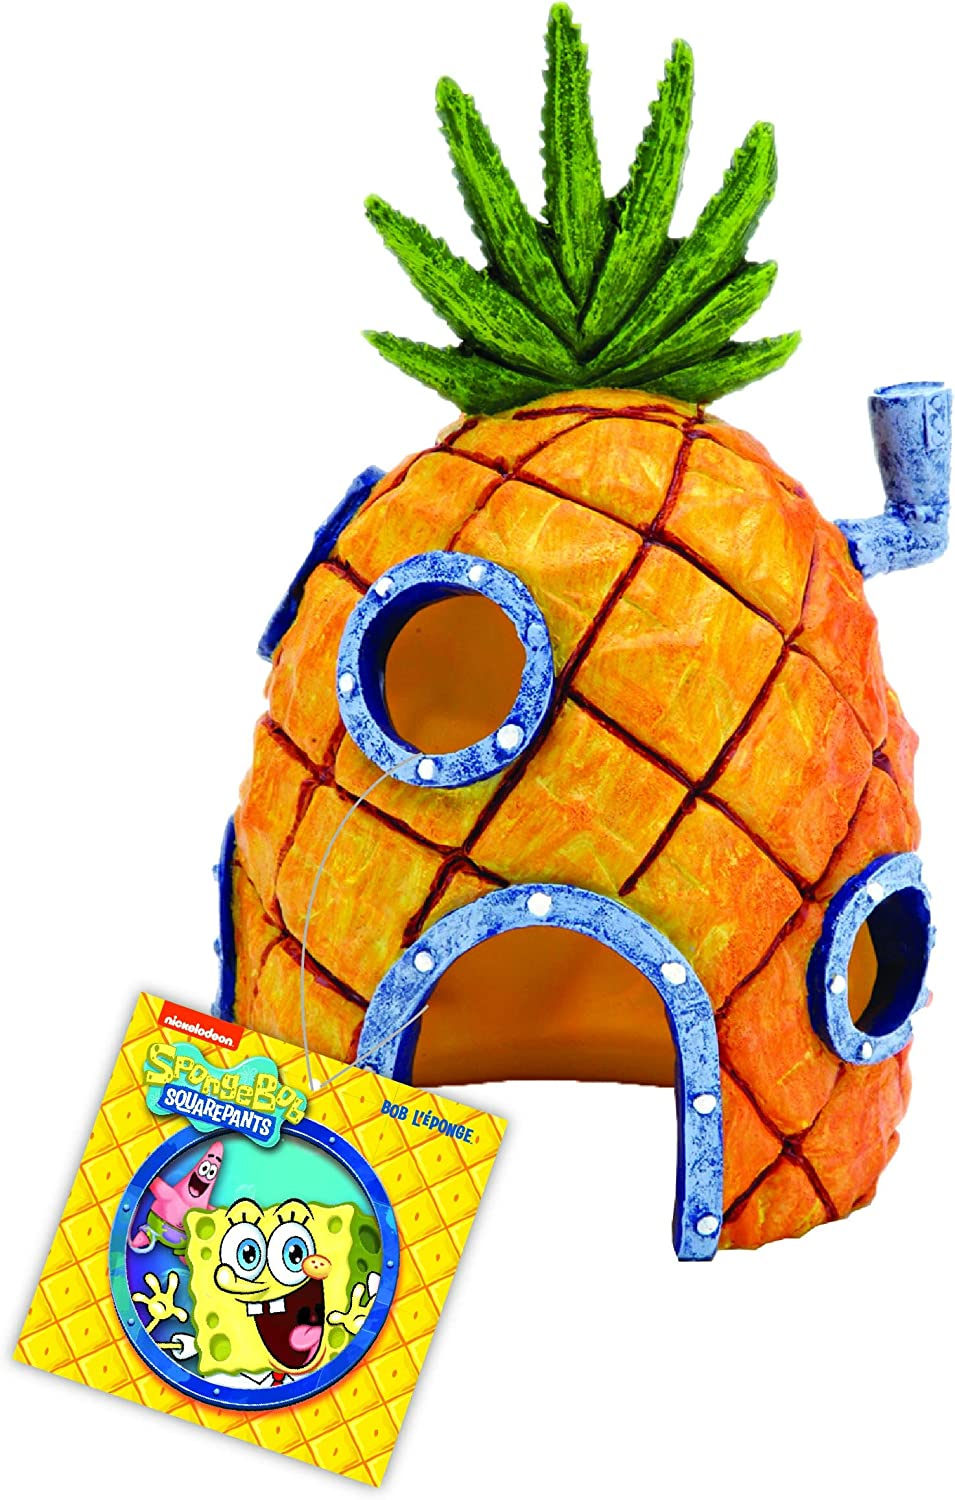 6" SpongeBob SquarePants Pineapple Home Aquarium Ornament $4.11